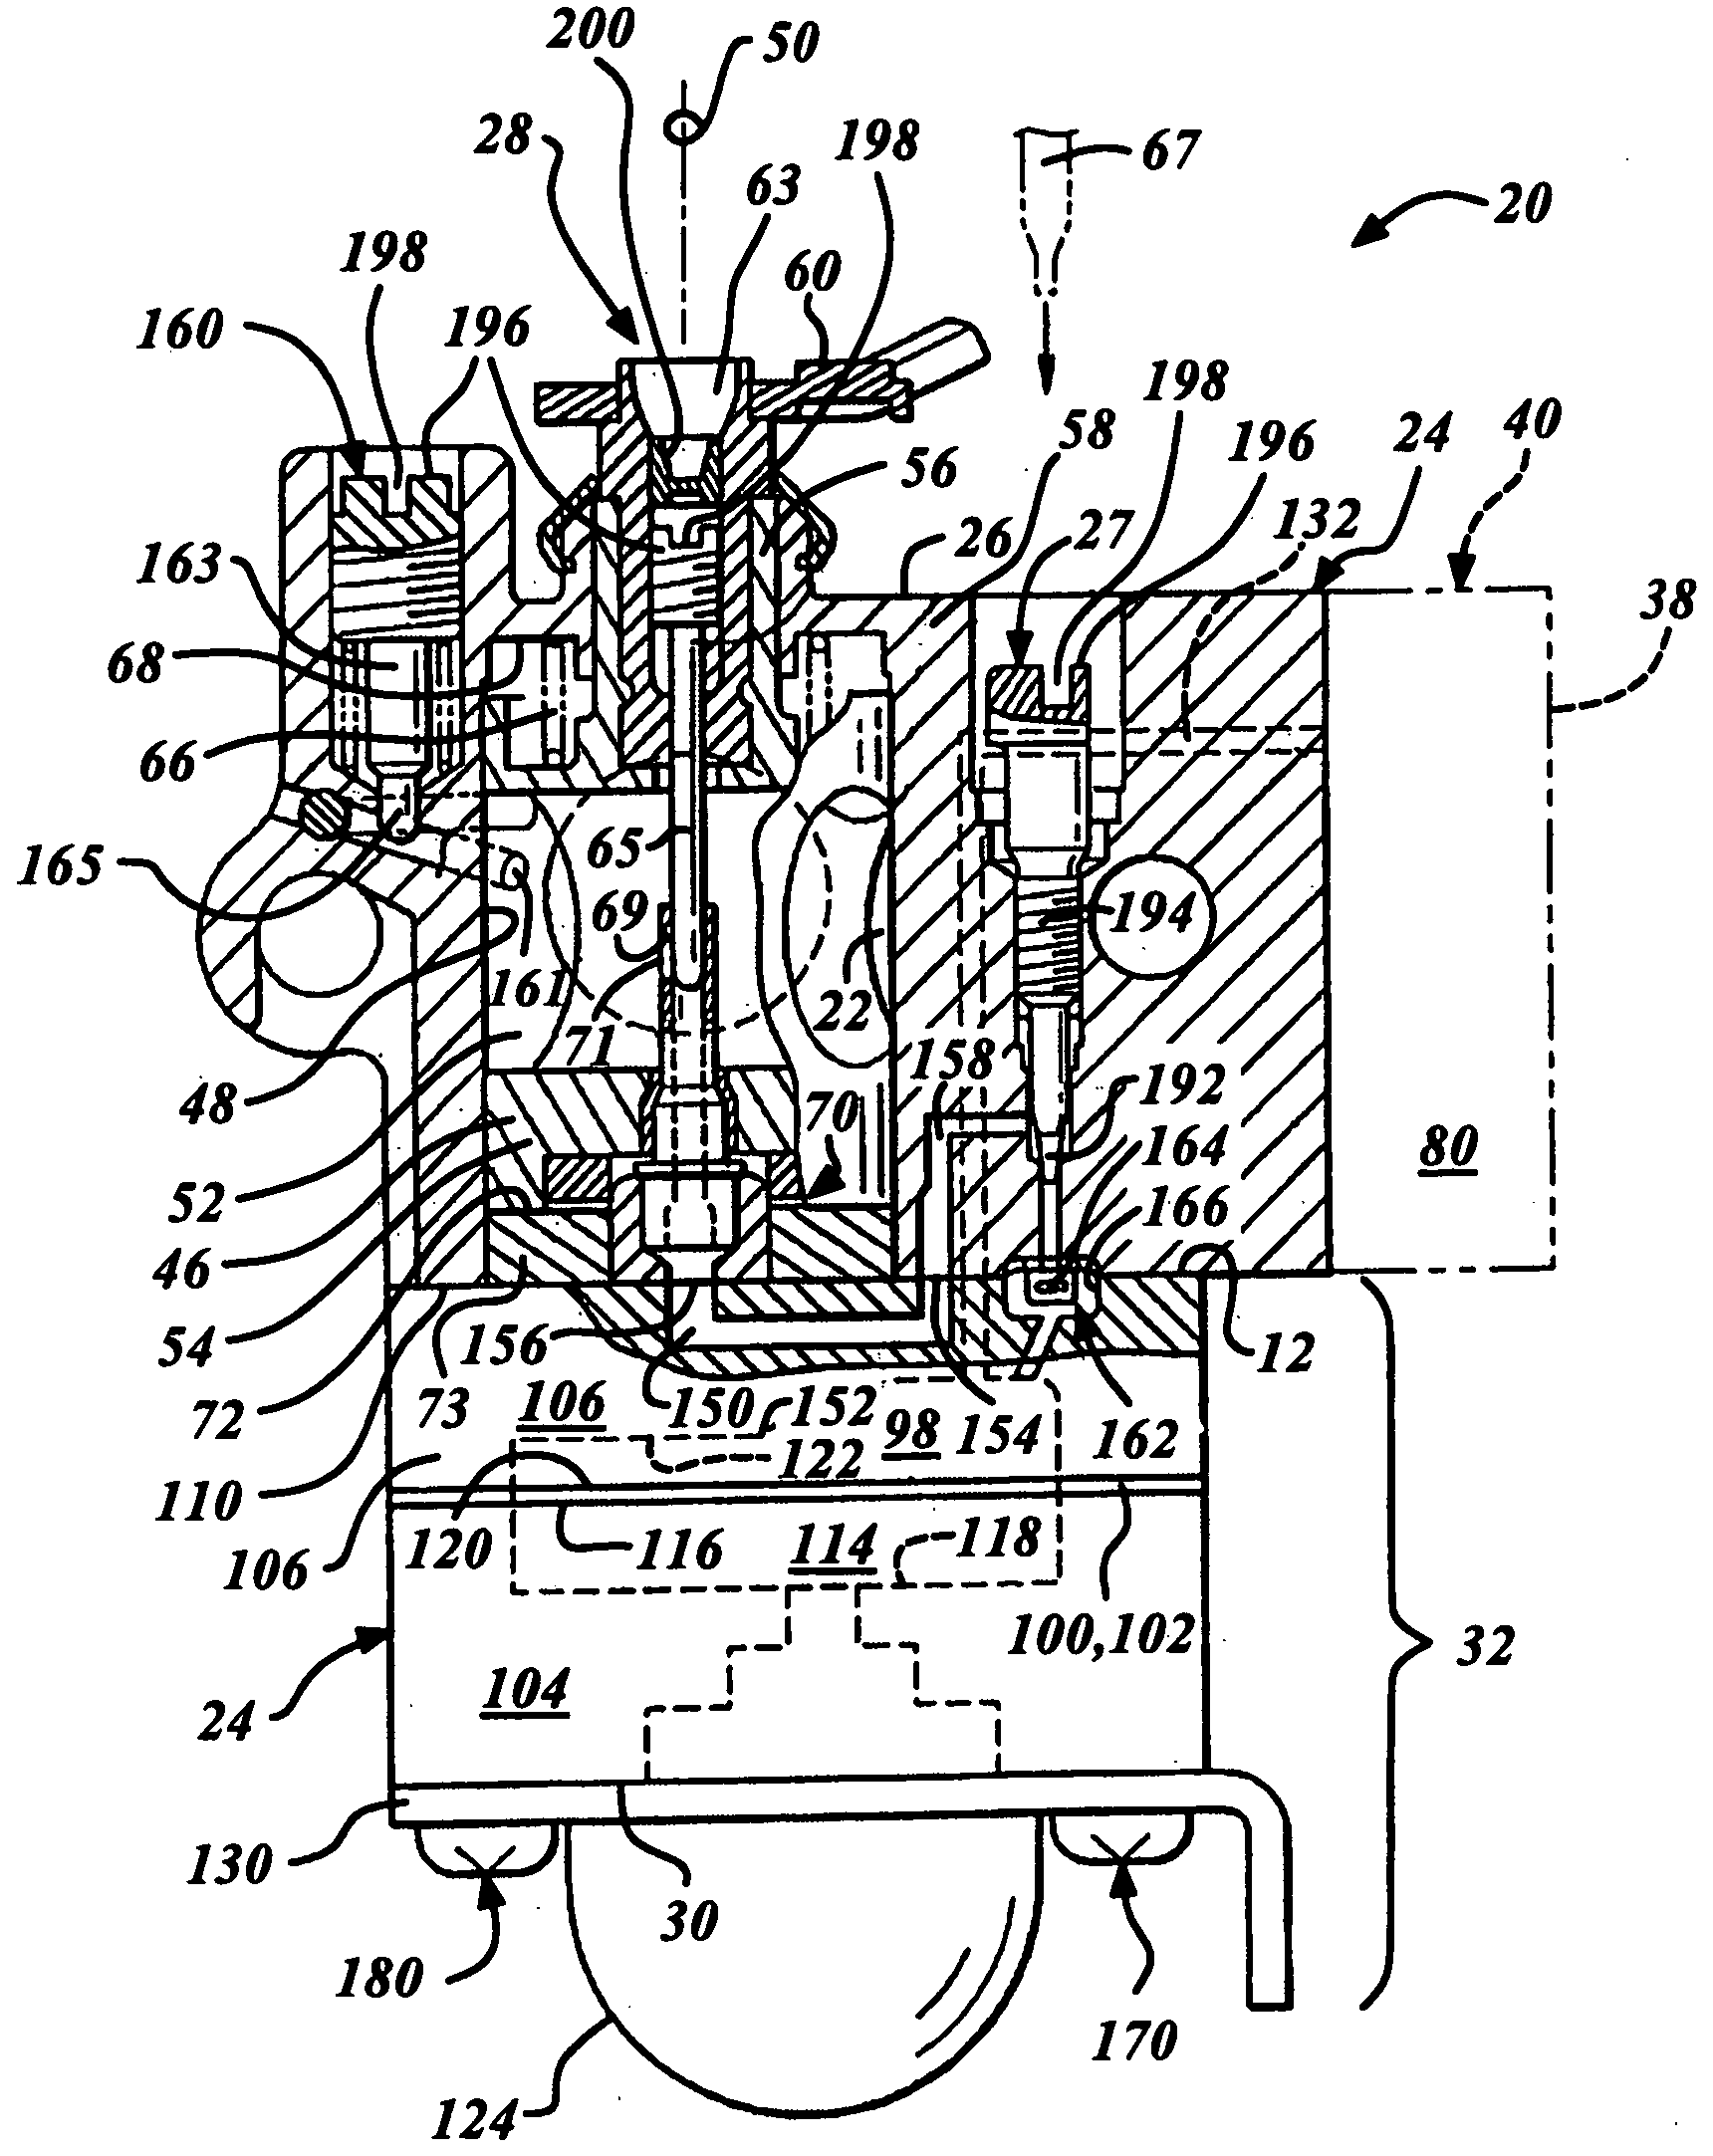 Rotary carburetor